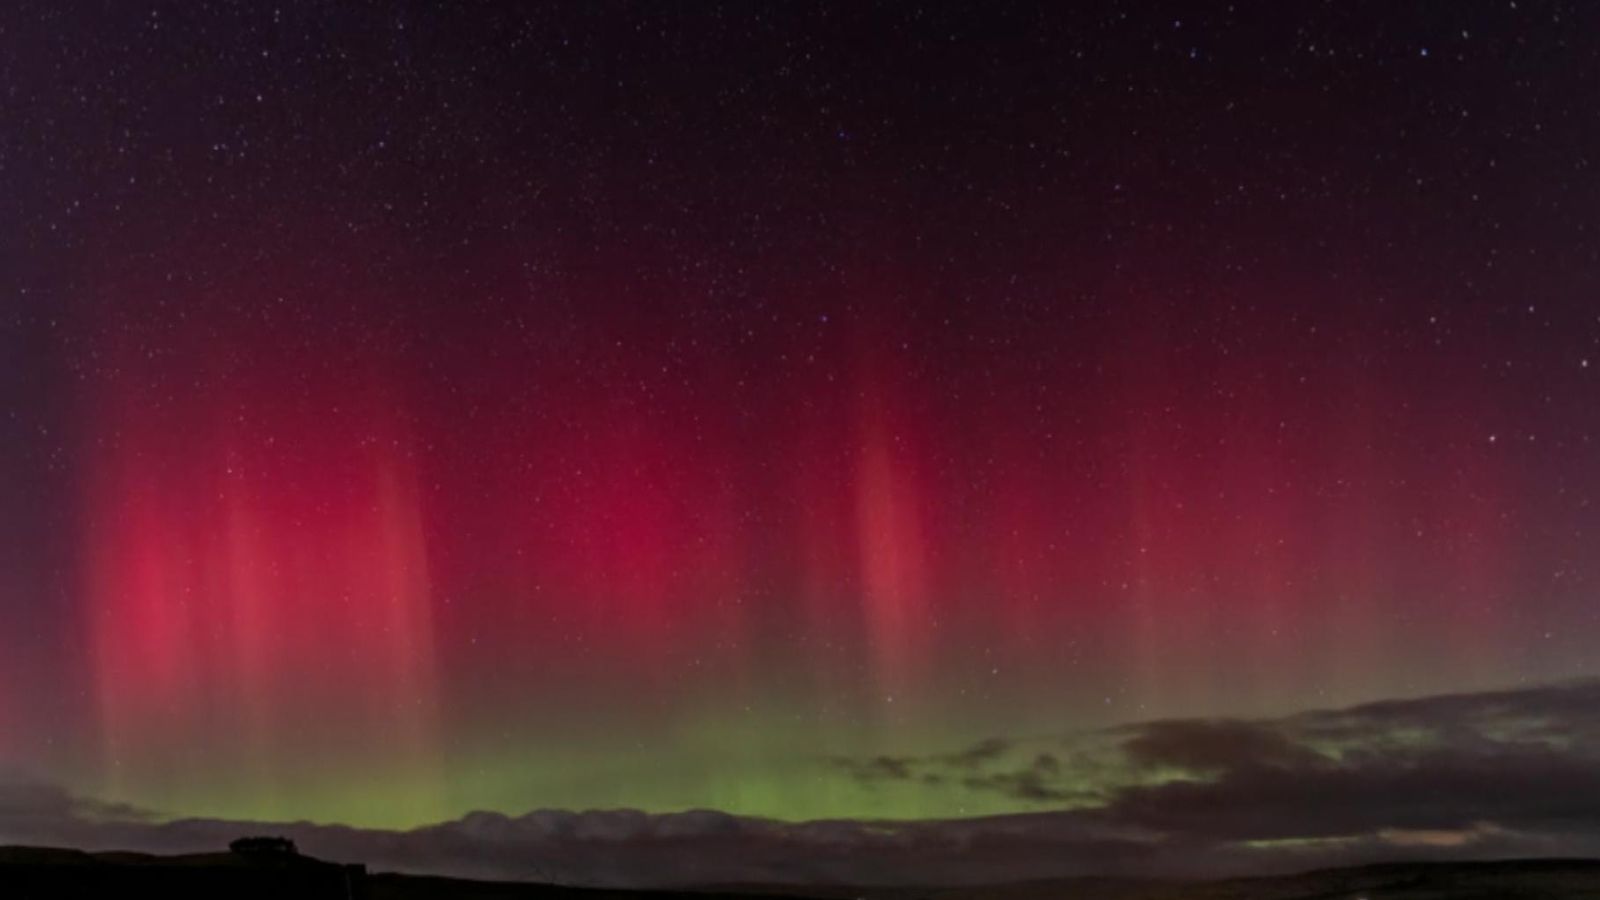 Northern Lights seen over England's skies Science & Tech News Sky News